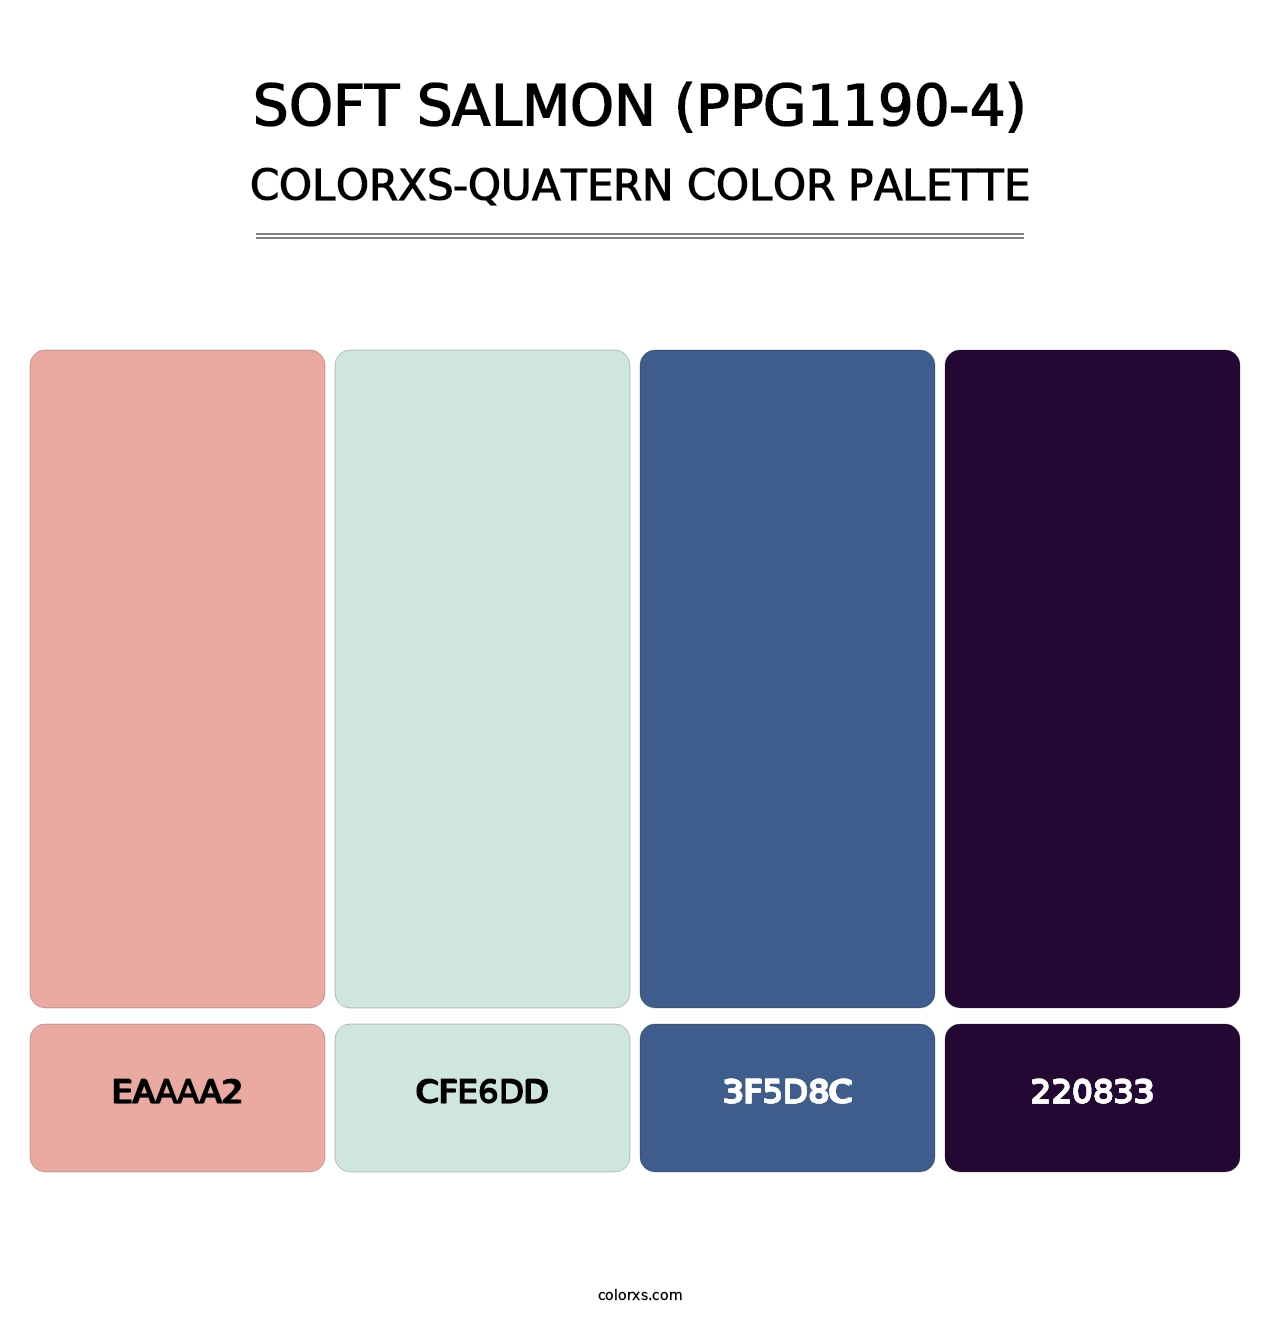 Soft Salmon (PPG1190-4) - Colorxs Quatern Palette